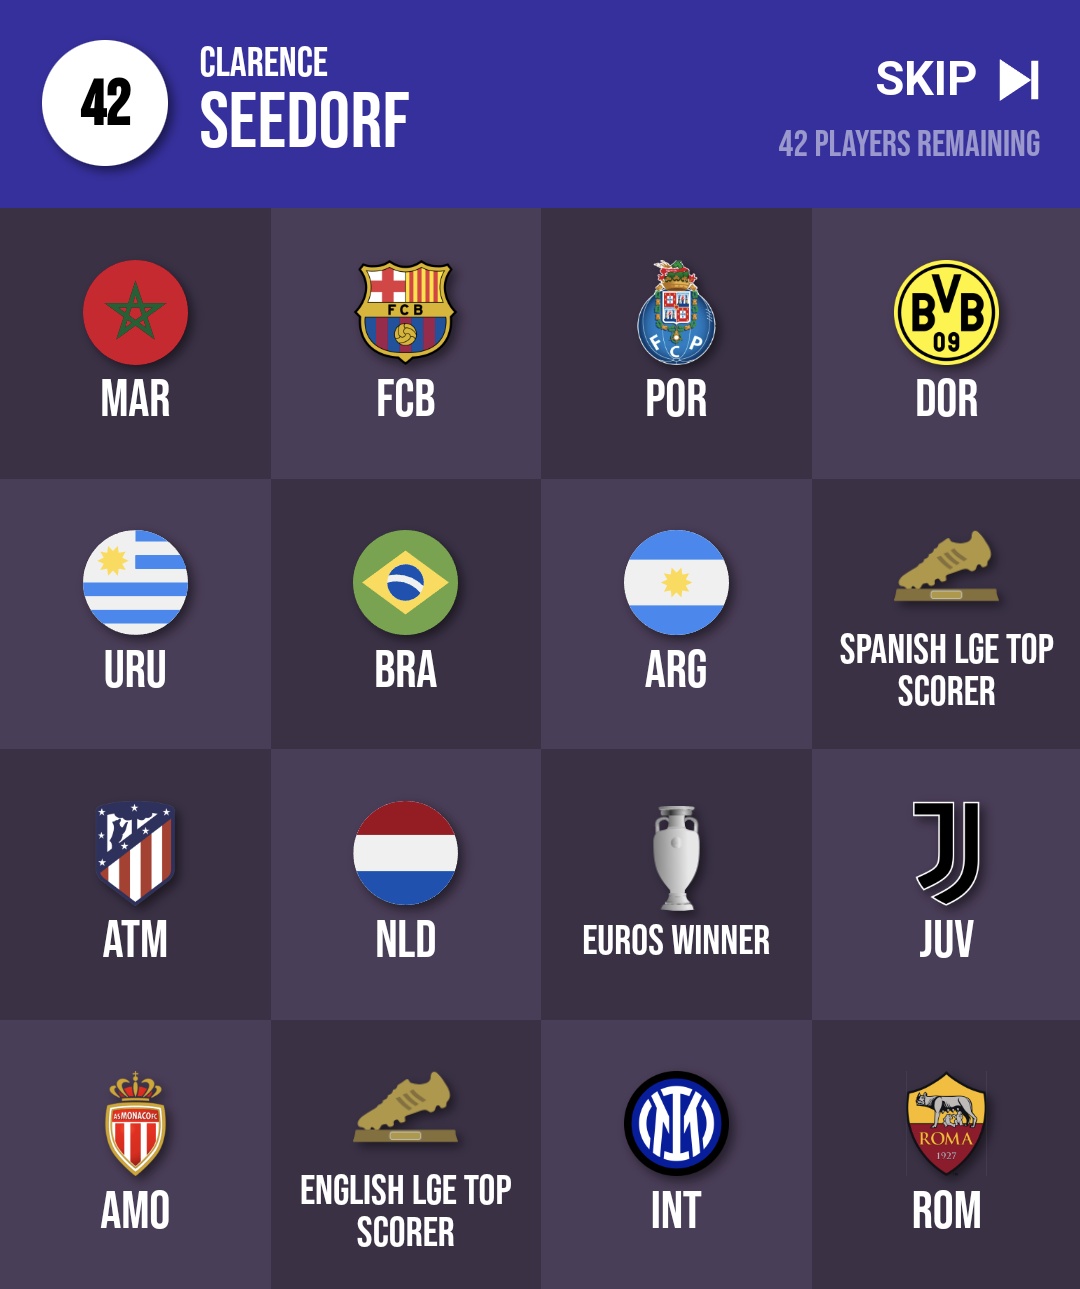 Futbol Grid - Play Futbol Grid On Wordle Website